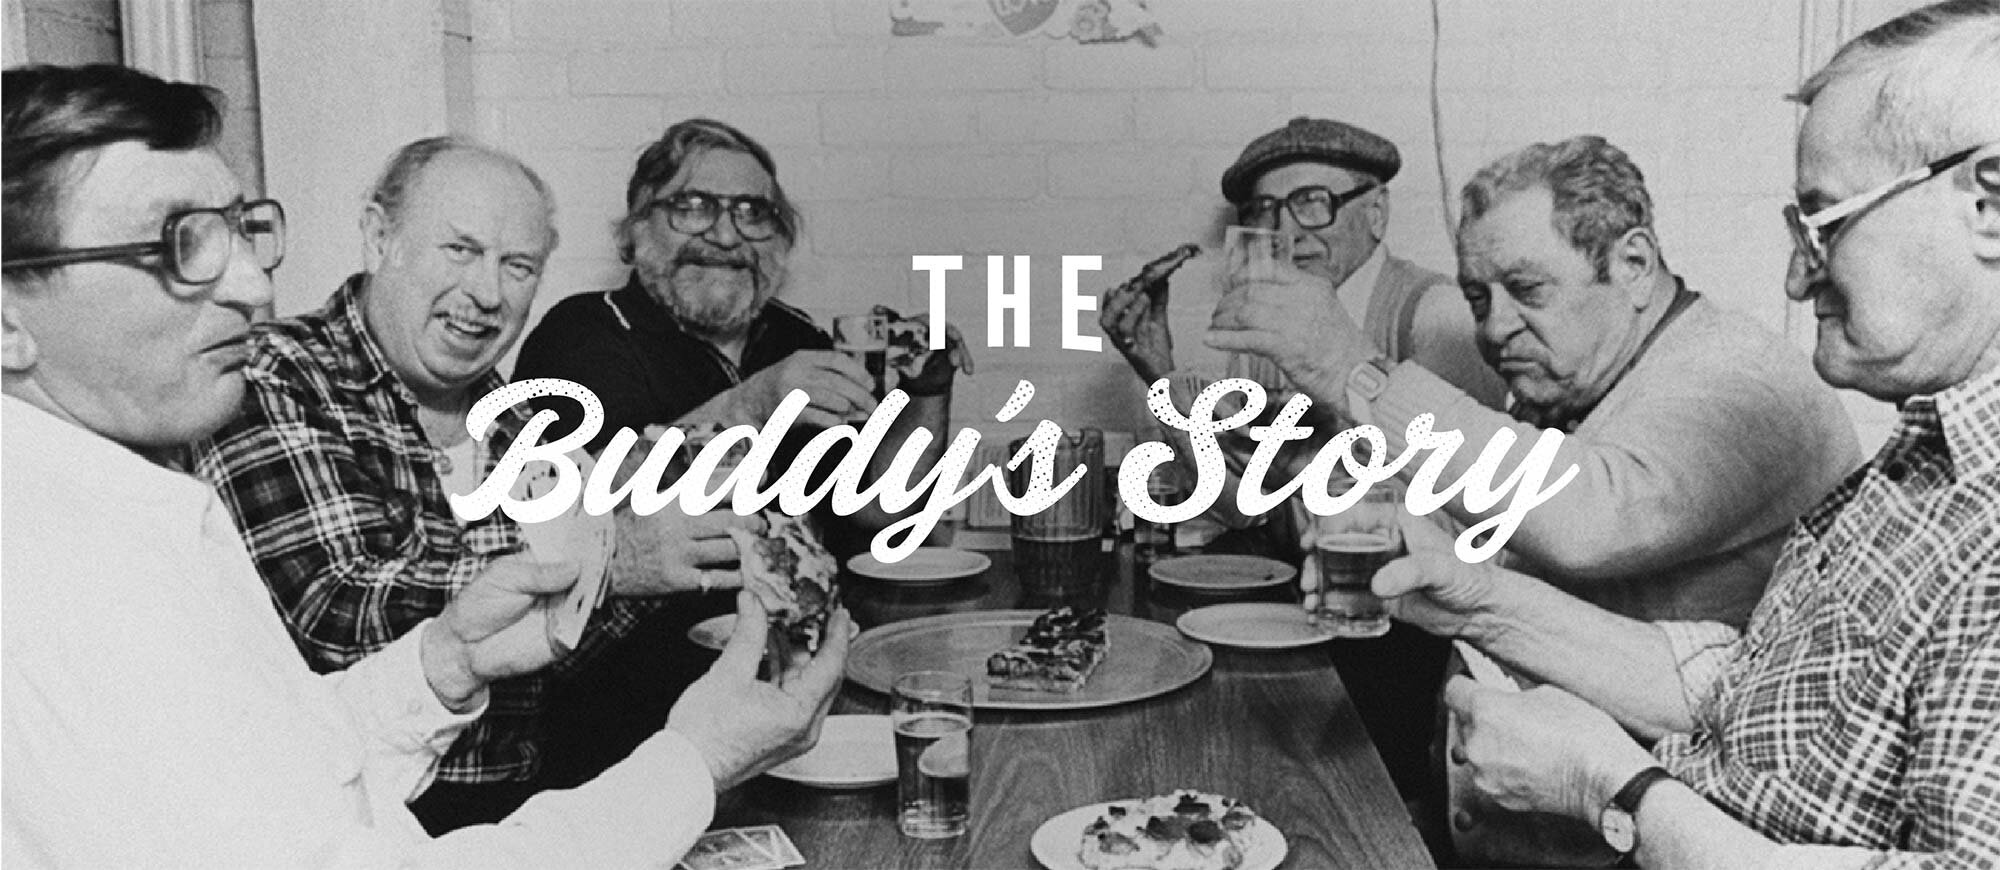 the-buddys-story.jpg